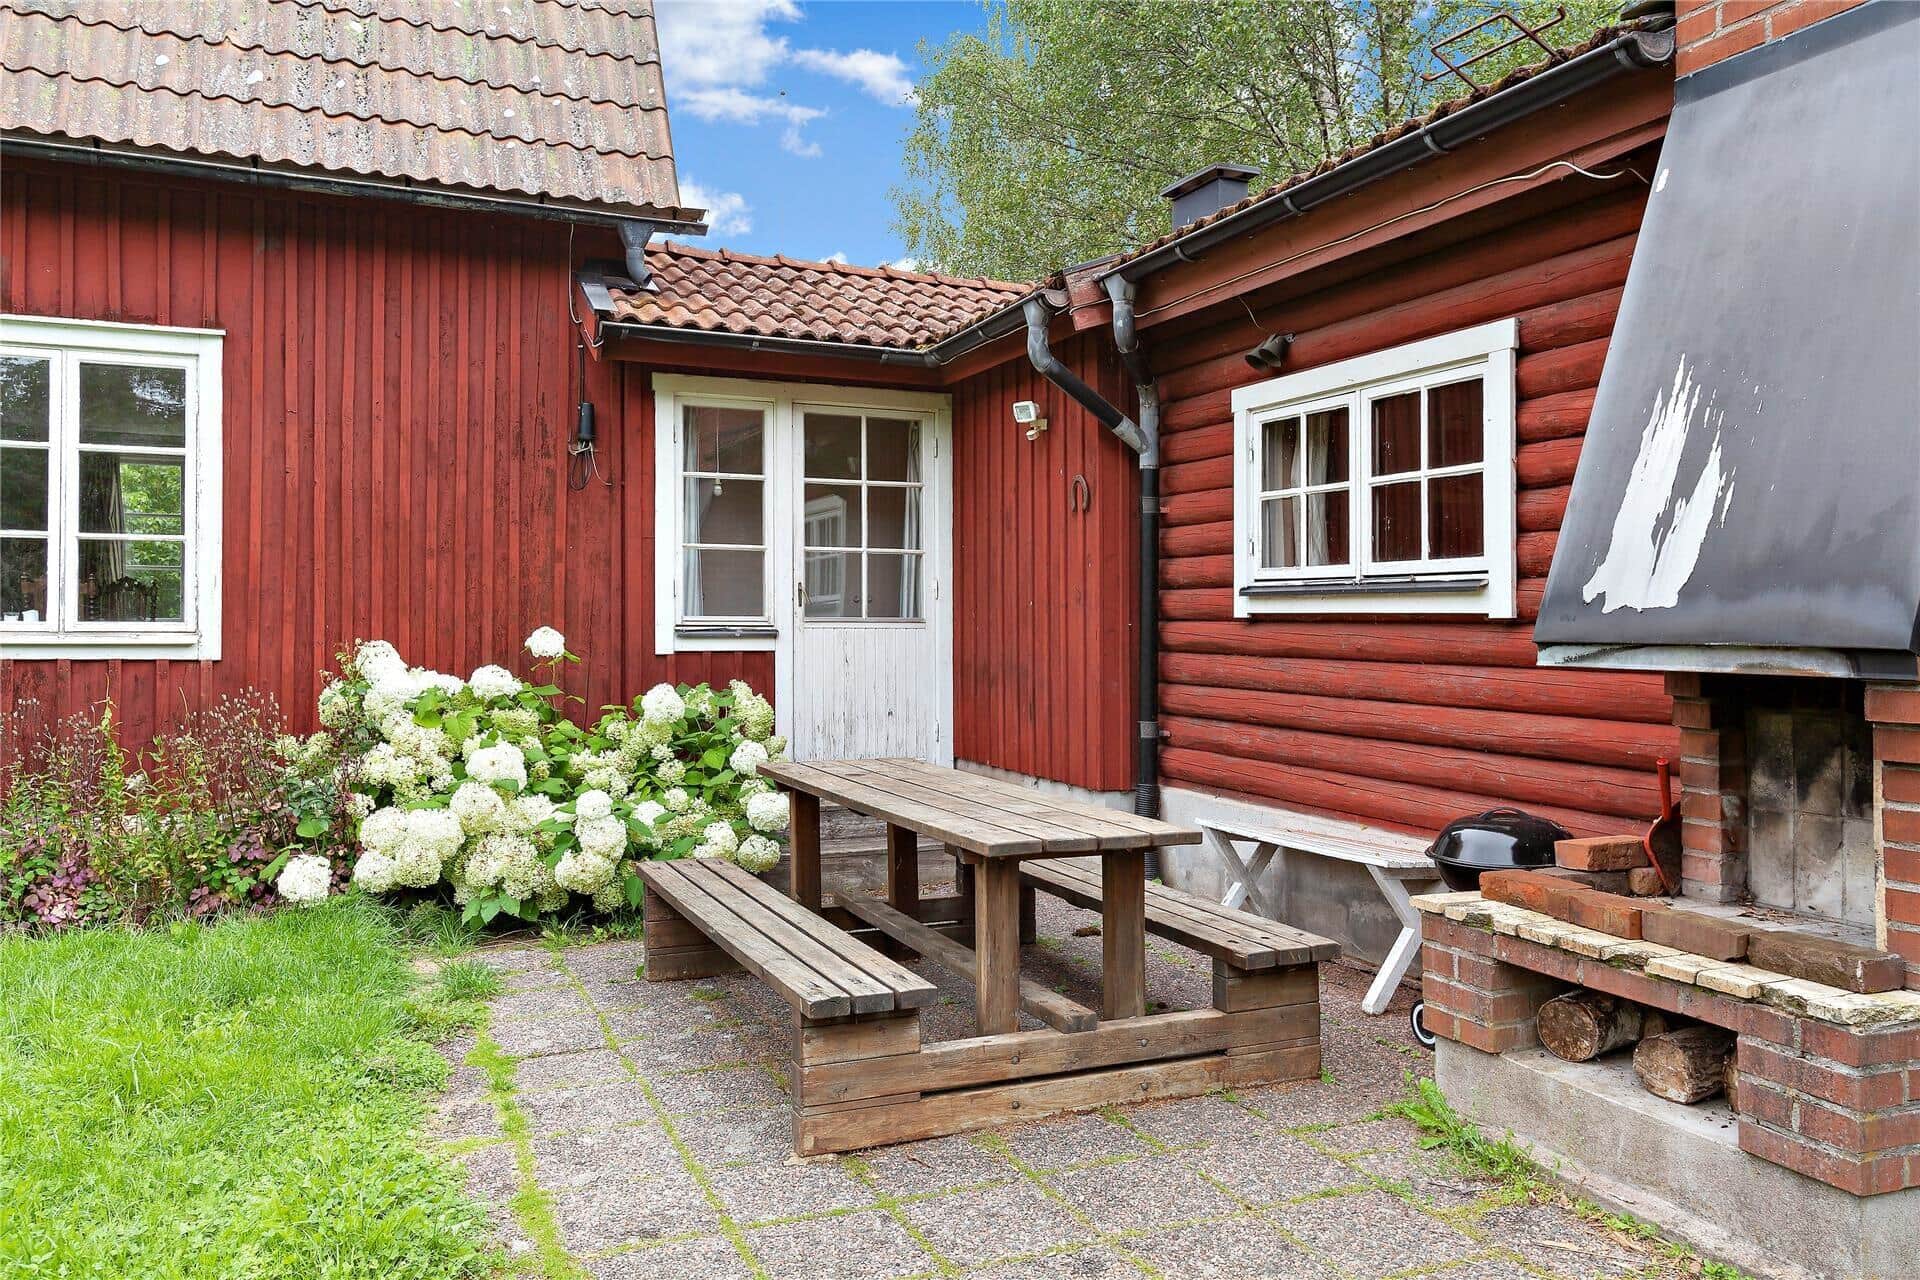 Image 0-171 Holiday-home JON450, Svenarp 6, DK - 57019 Pauliström